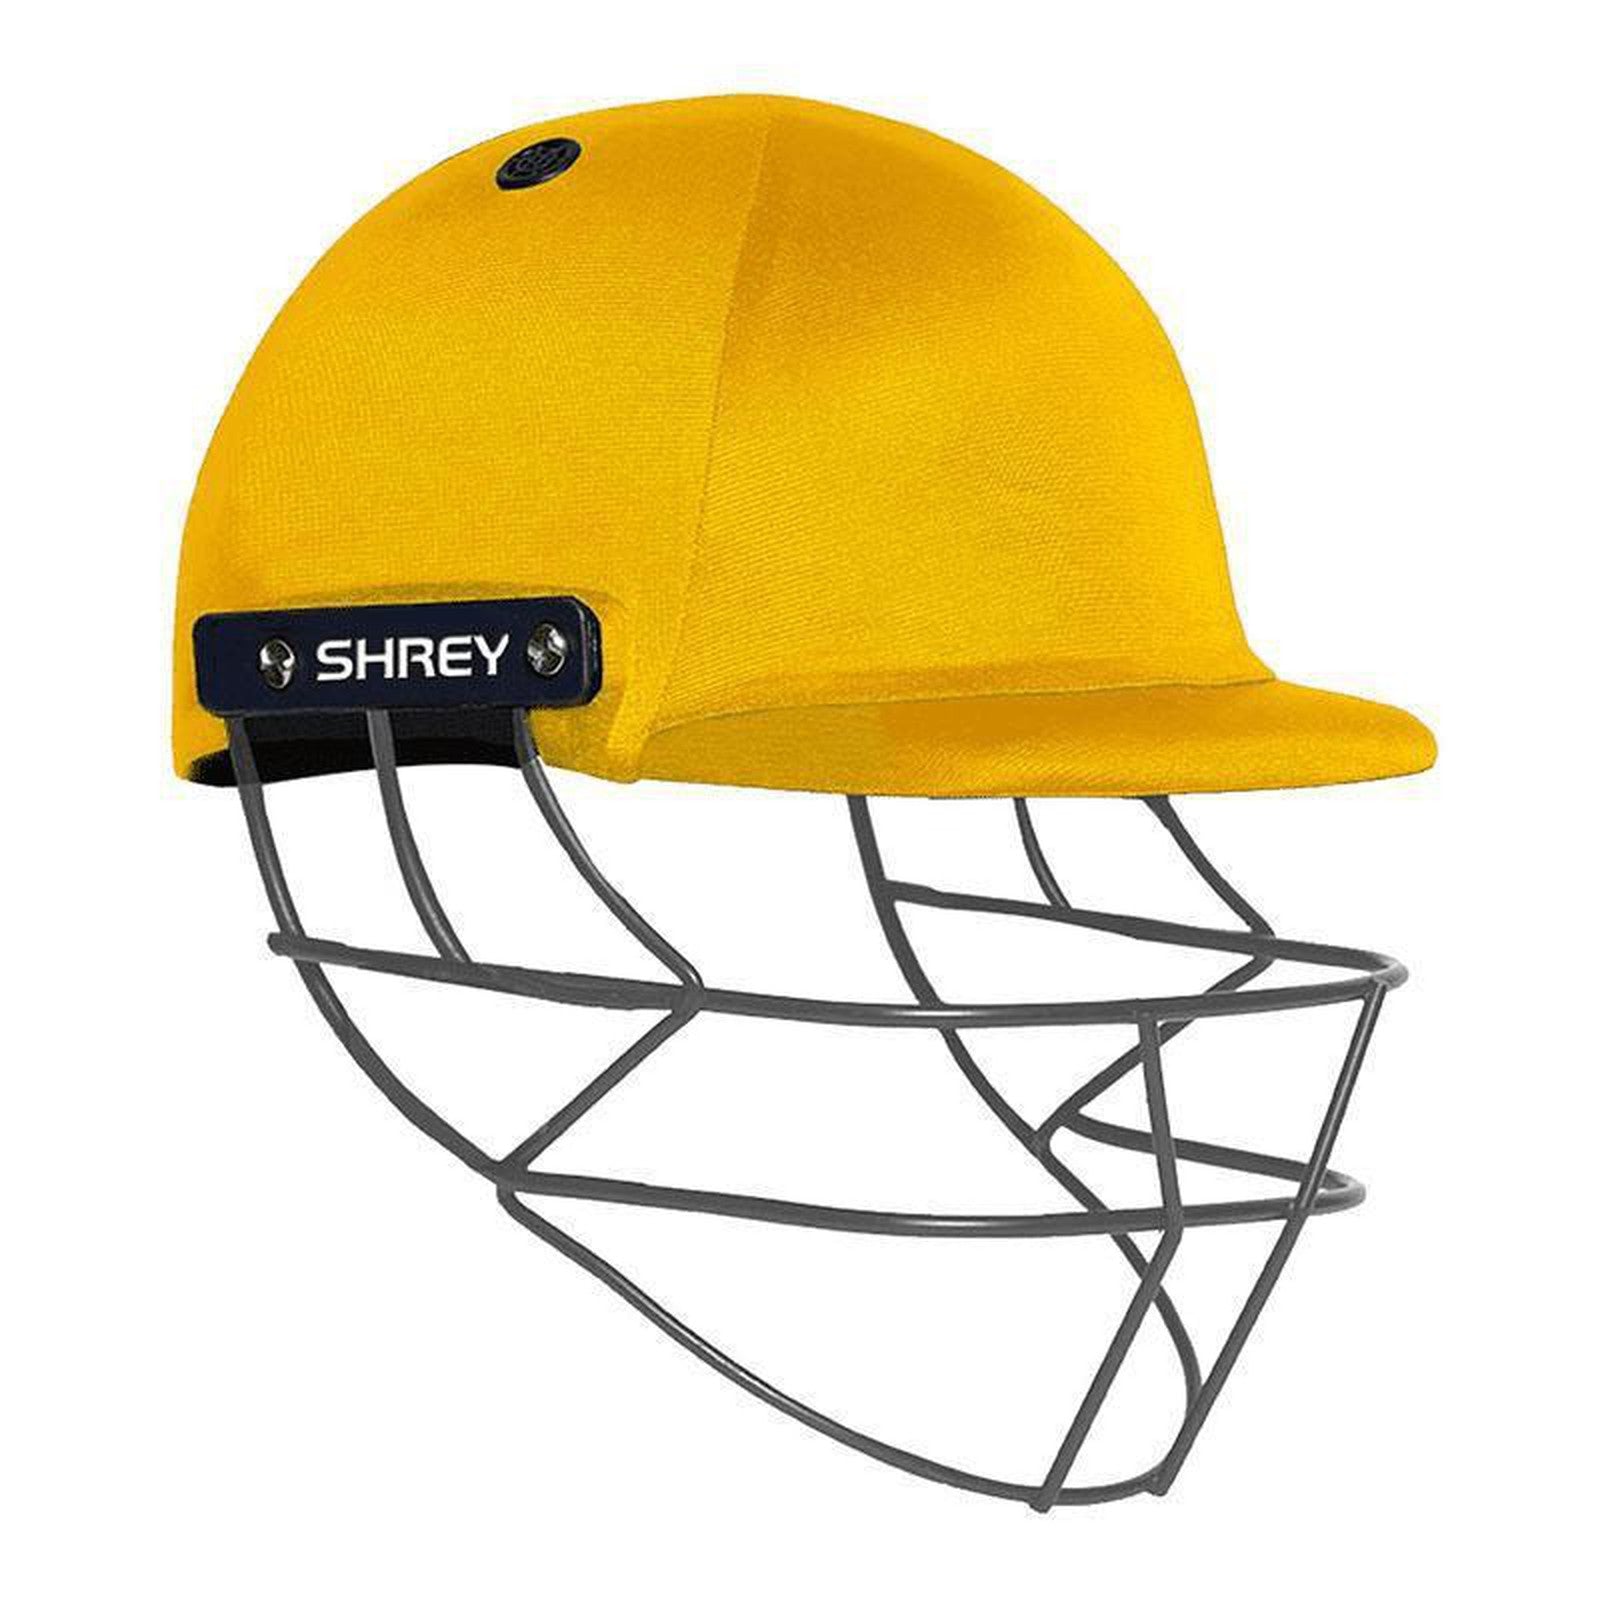 Shrey Performance 2.0 Cricket Helmet With Mild Steel - Yellow Senior